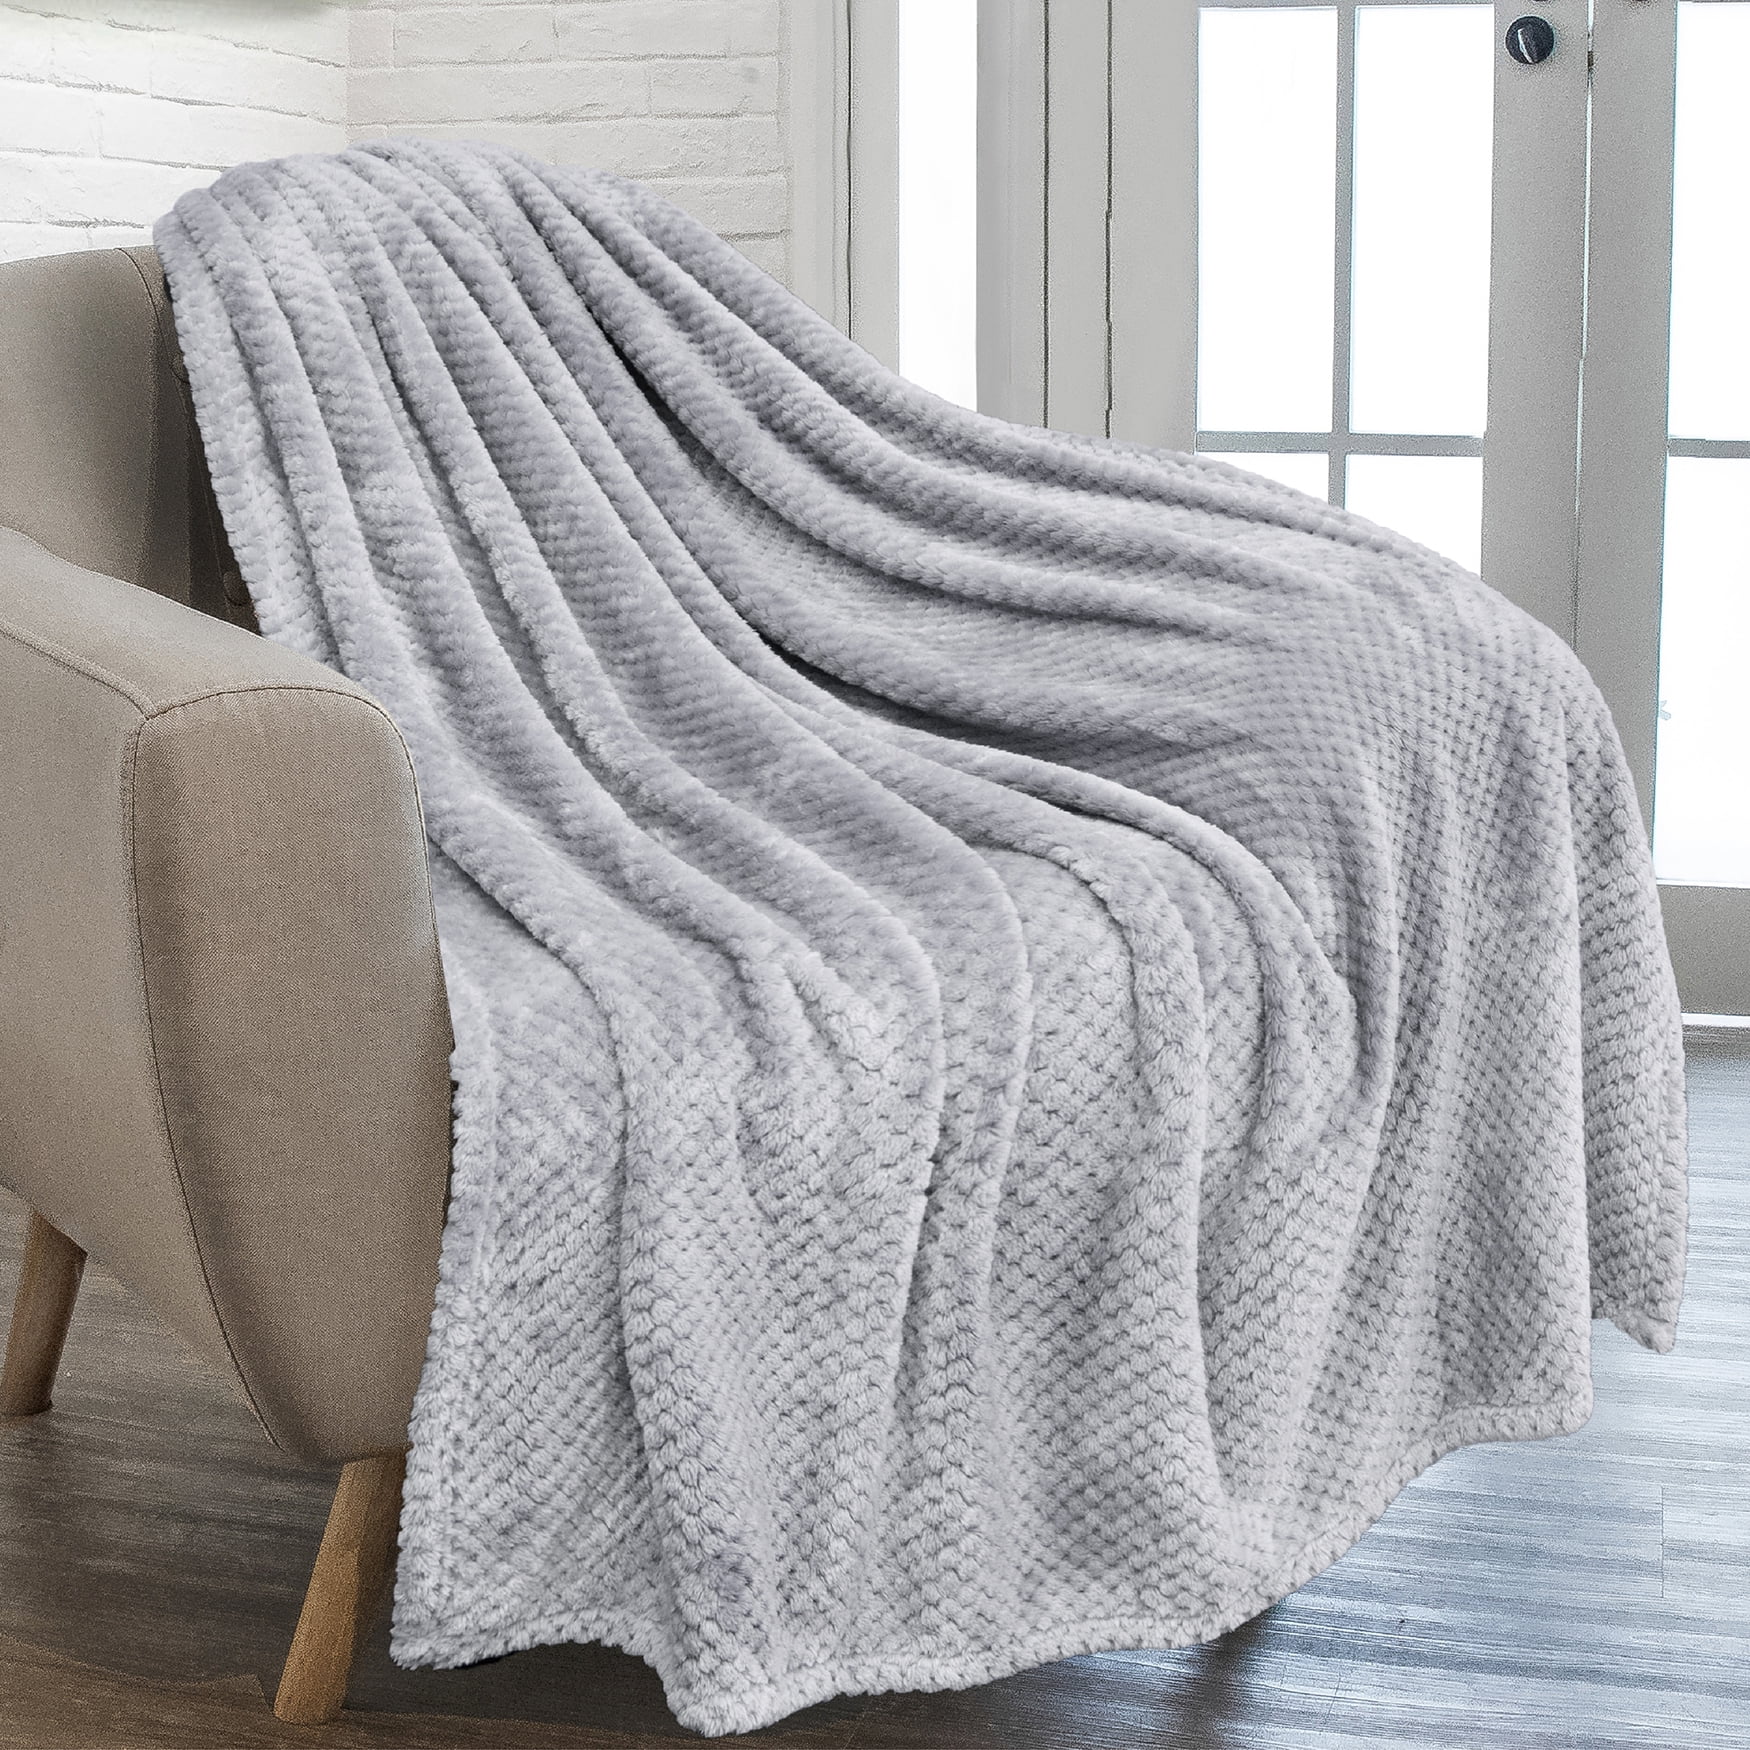 White Luxury Warm Soft Large 225cm x 254cm Fleece Sofa Couch Bed Blanket Throw 